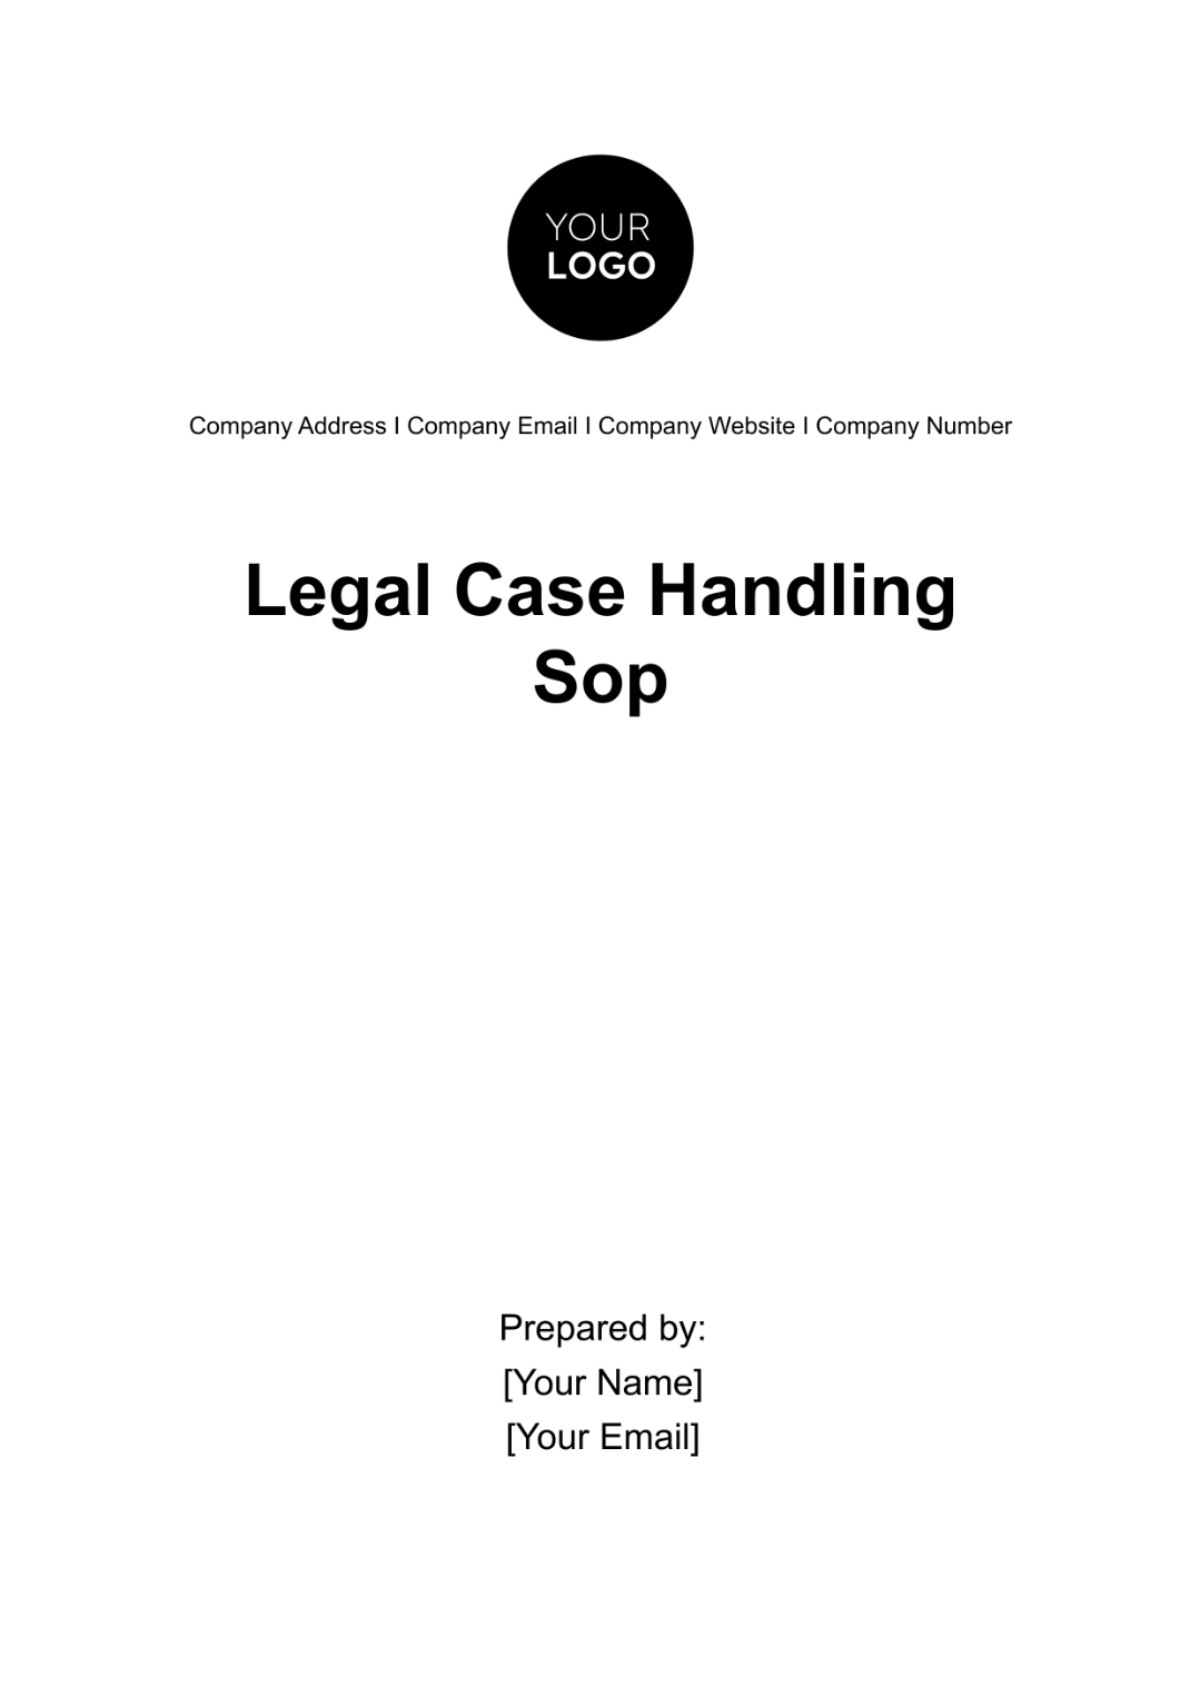 Legal Case Handling SOP Template